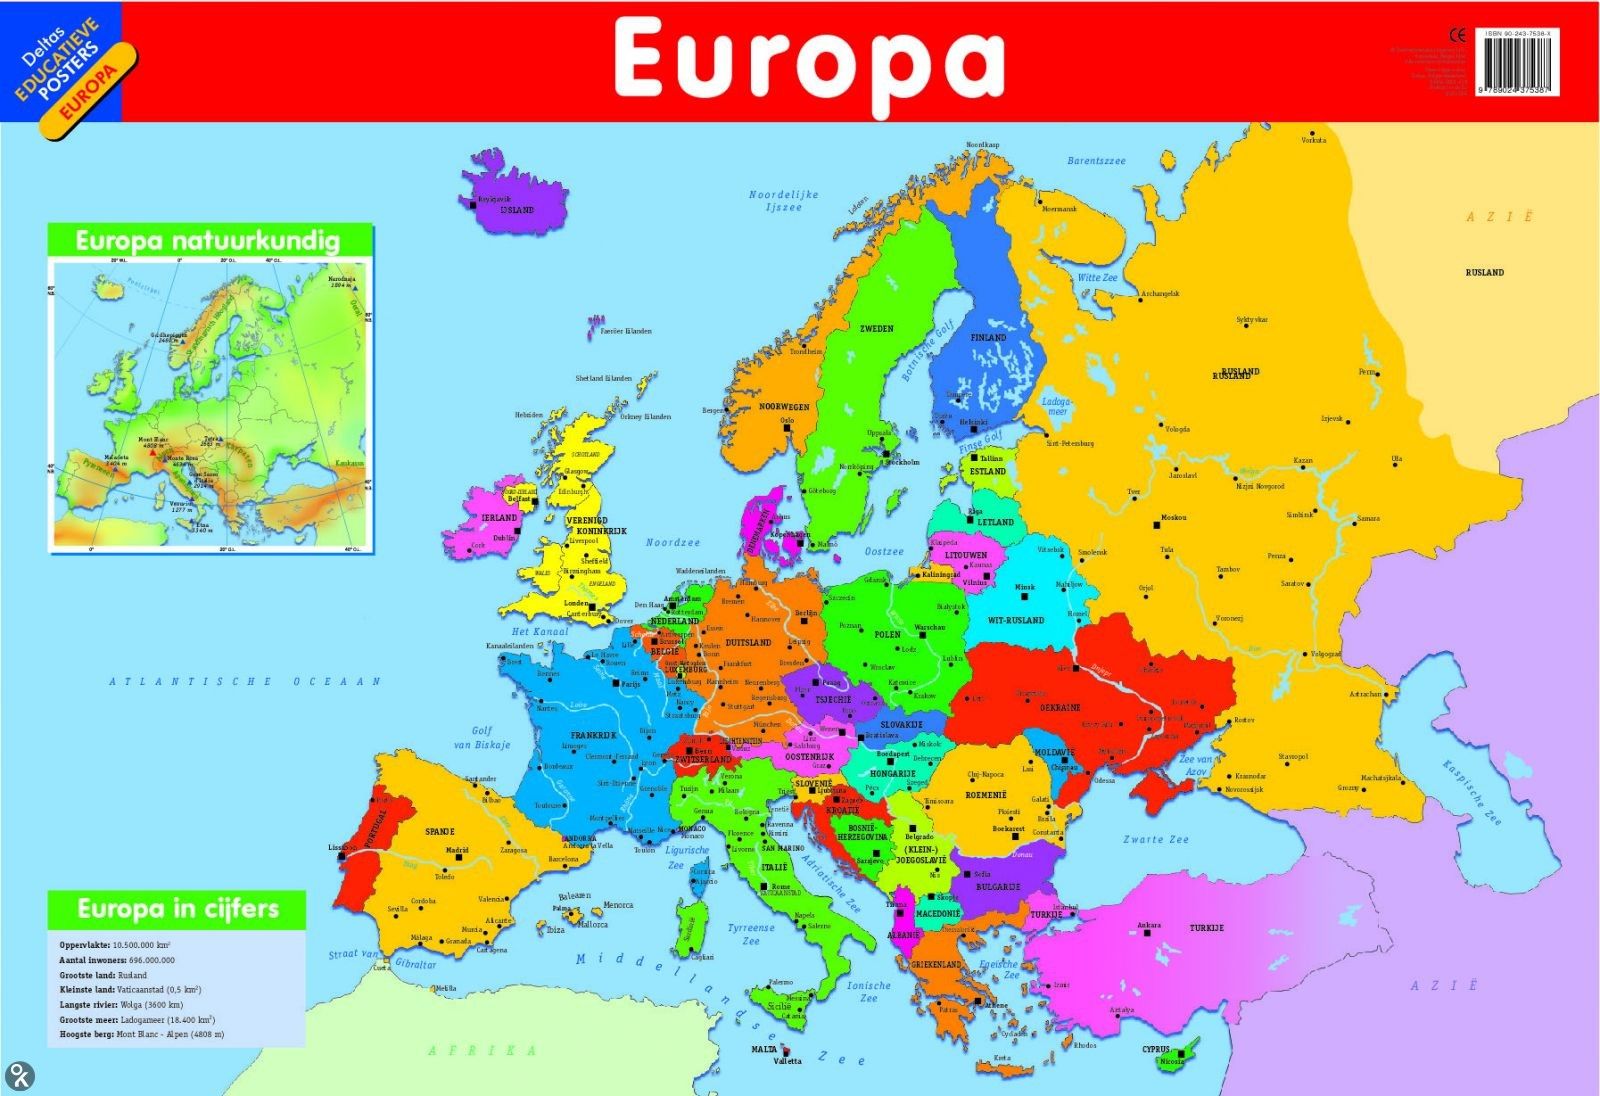 curiozitati despre Europa